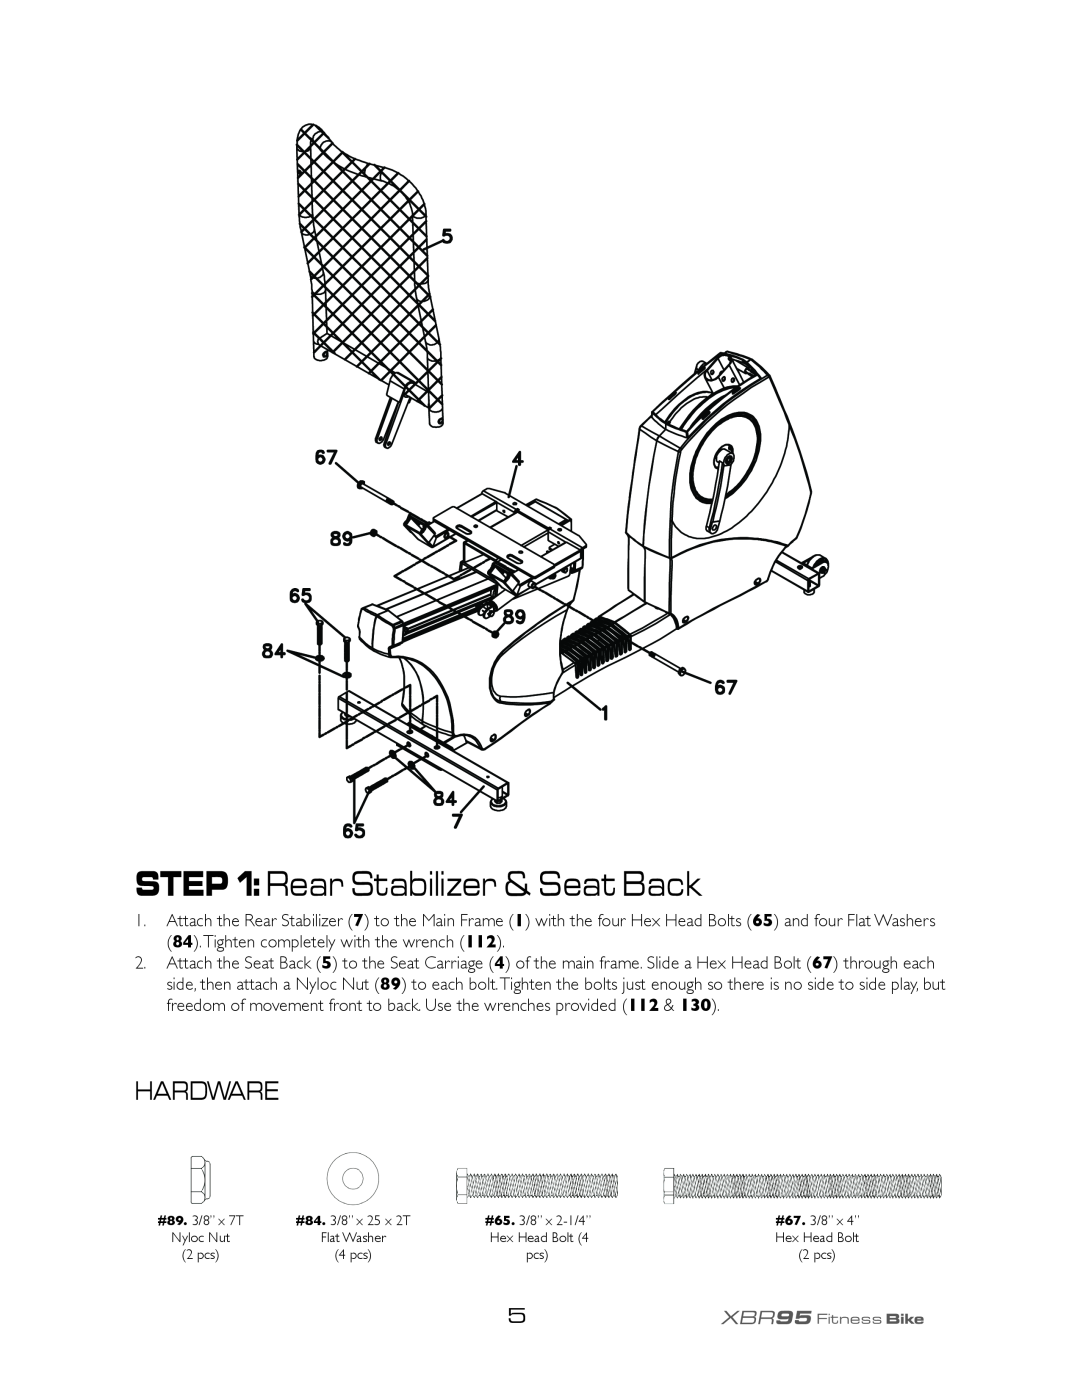 Spirit XBR95 owner manual Rear Stabilizer & Seat Back, Hardware 